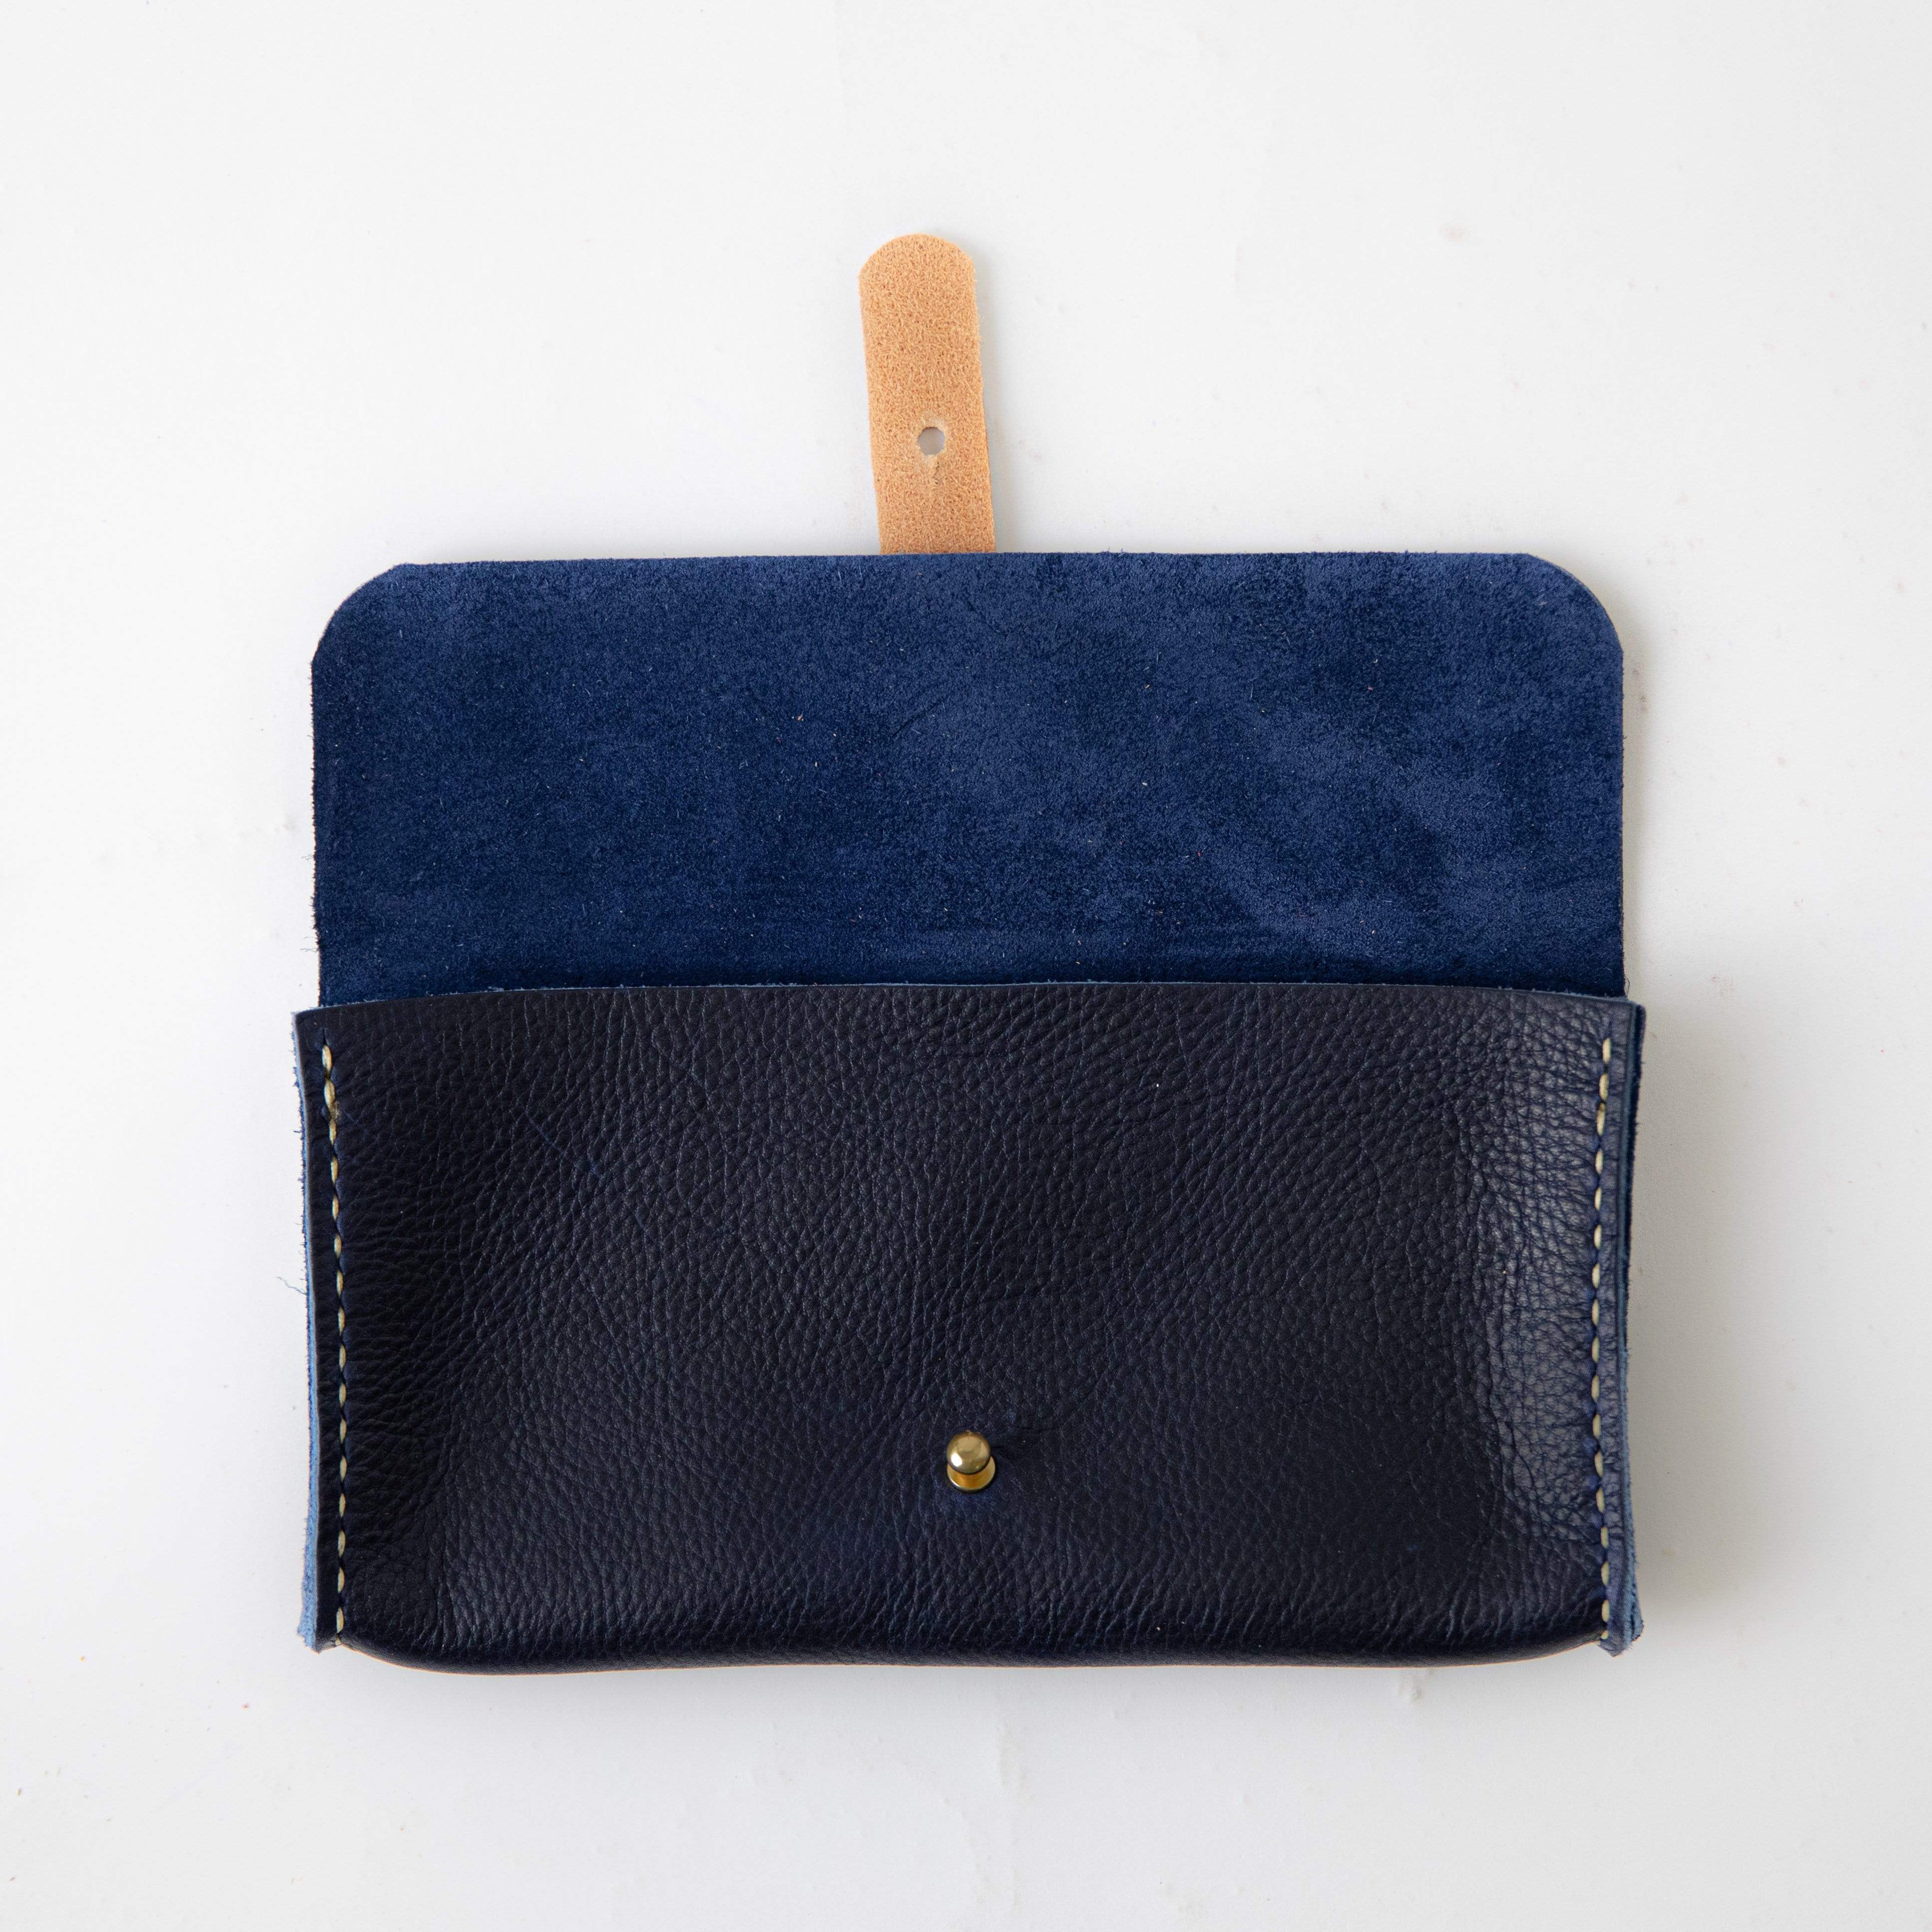 BALMAIN Paris x H&M Small Suede & Leather Clutch Cosmetic Bag Navy Blue NWT  | eBay